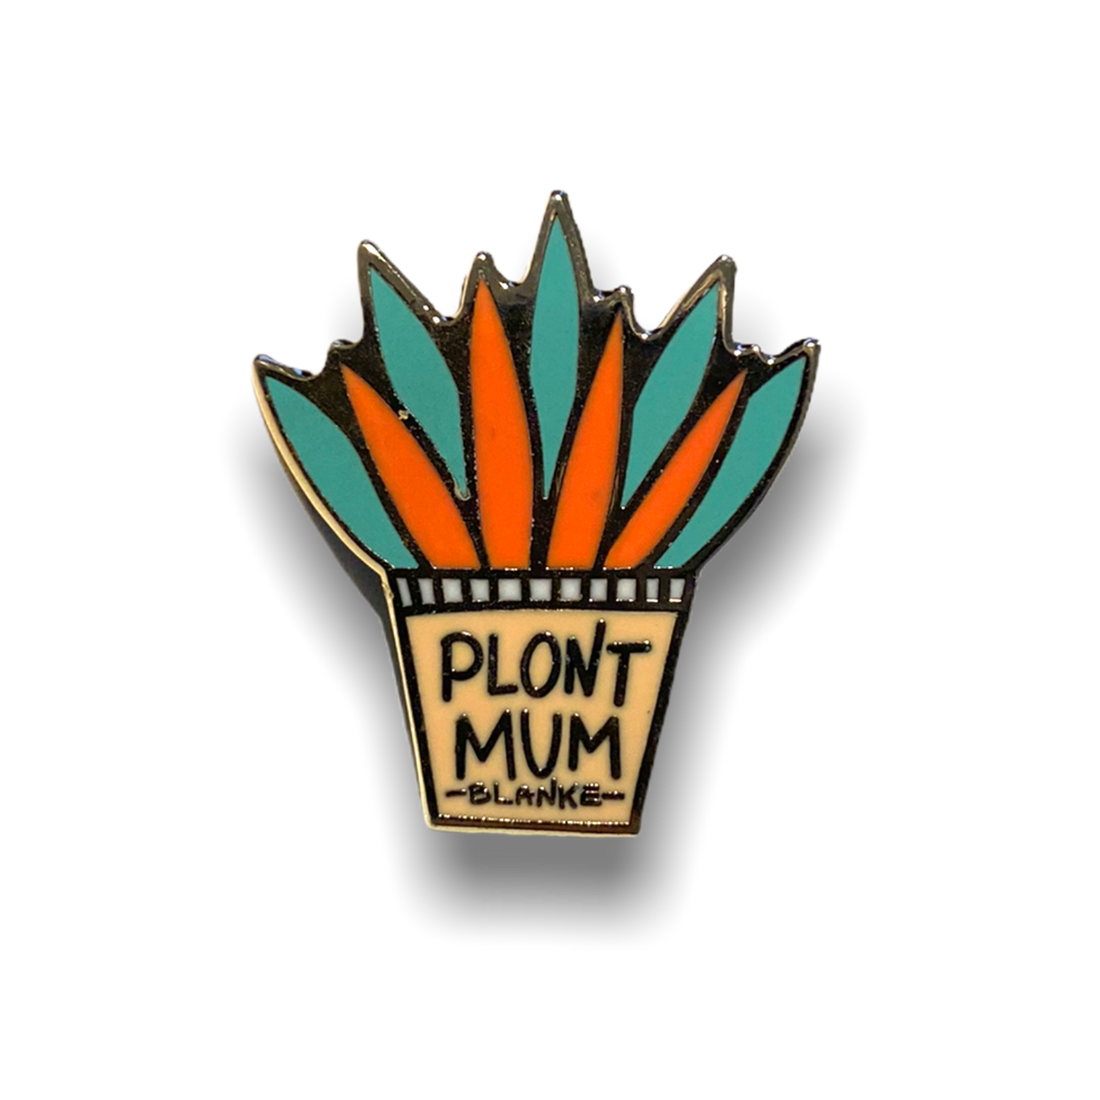 Blanke - Plont Mum - Pin